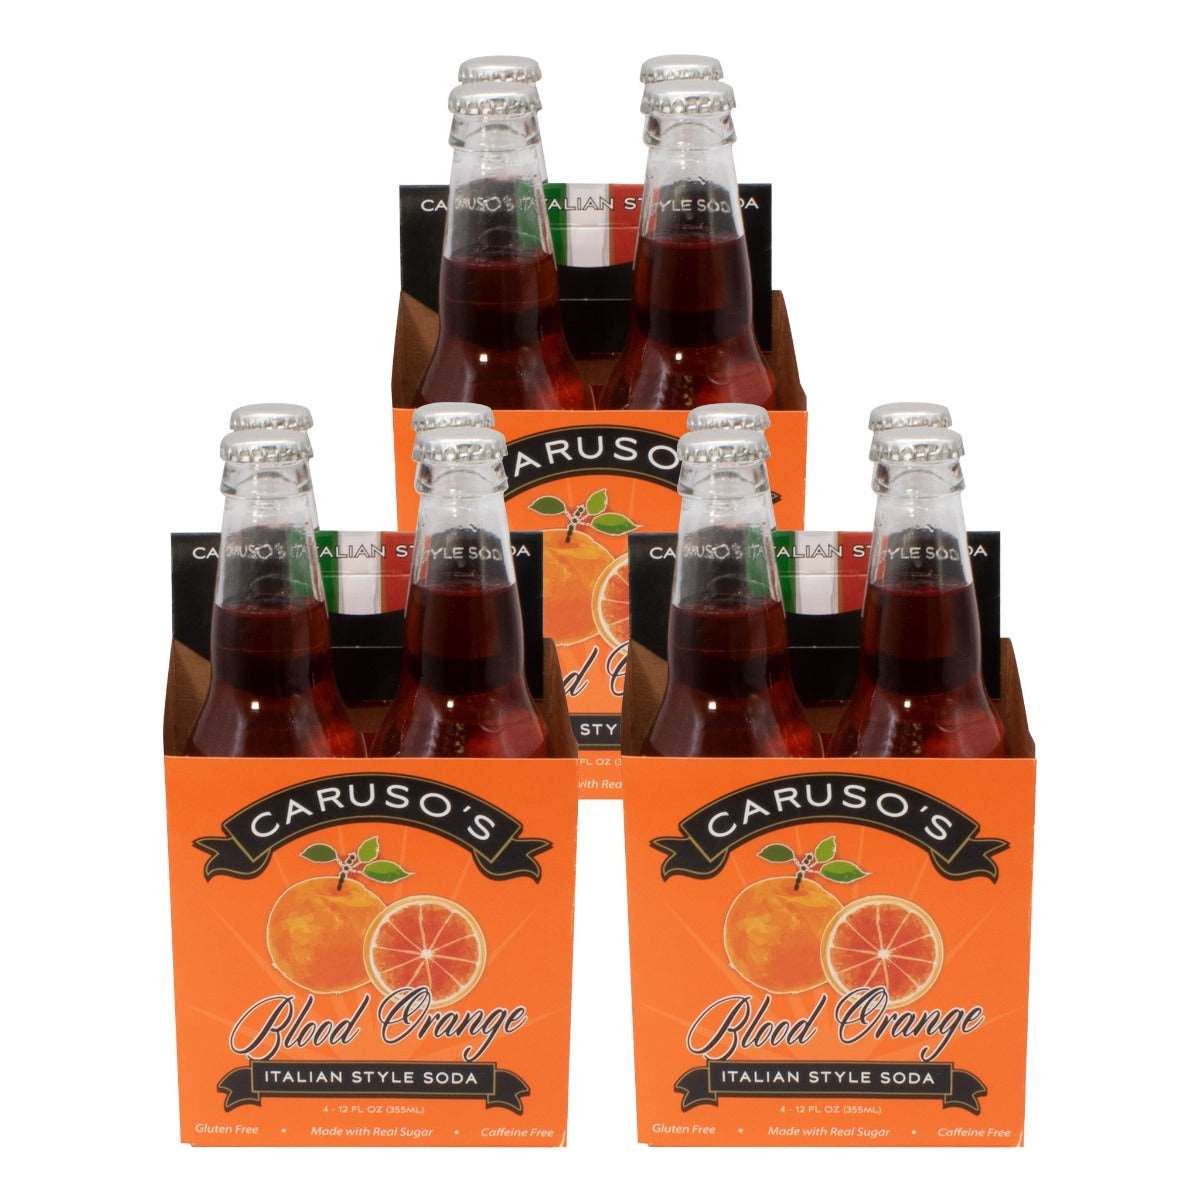 3 4-Packs of Caruso's Blood Orange Soda